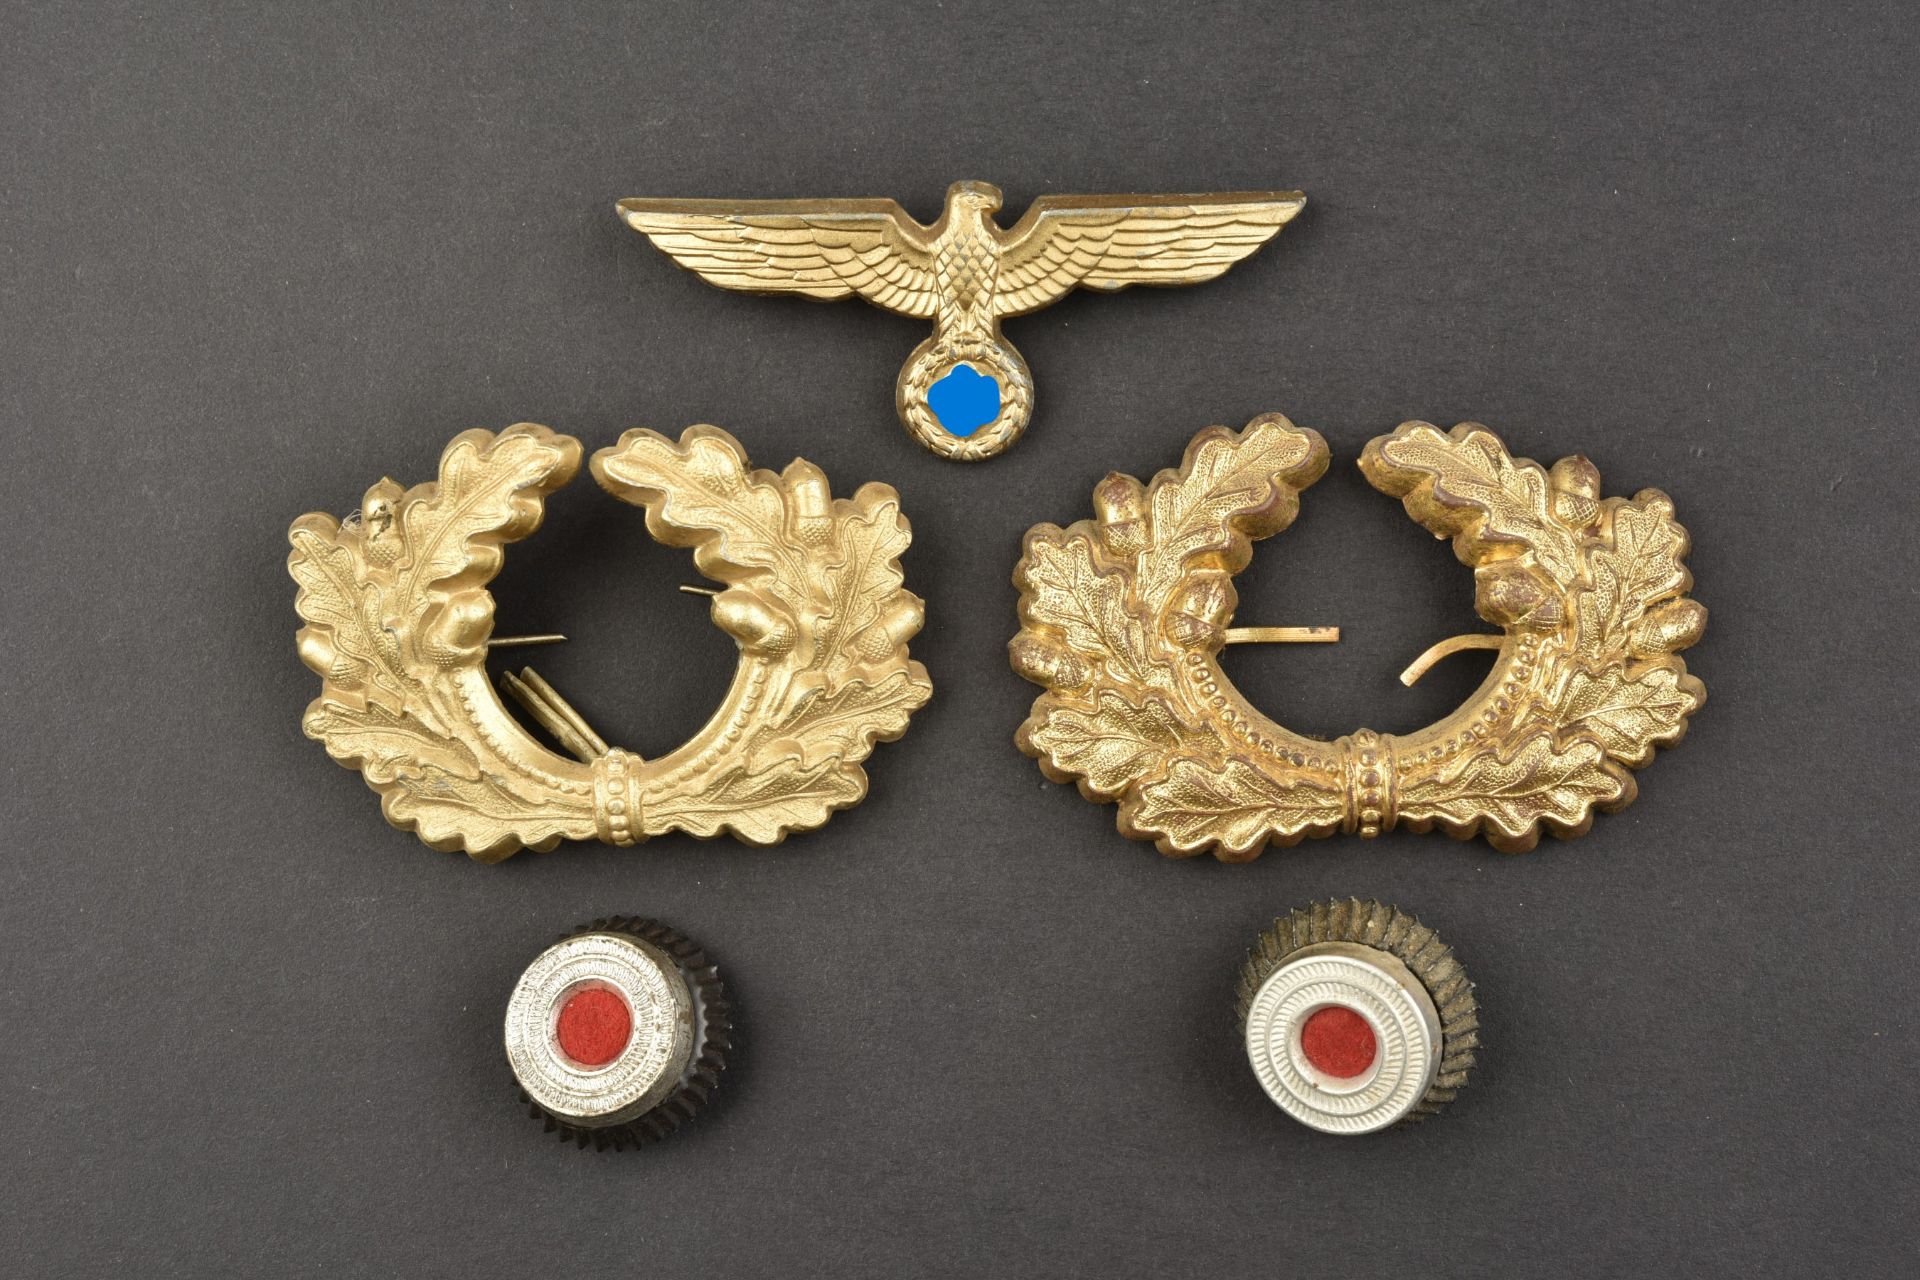 Insignes de coiffure General de la Heer. General of the Heer headgear insignia.